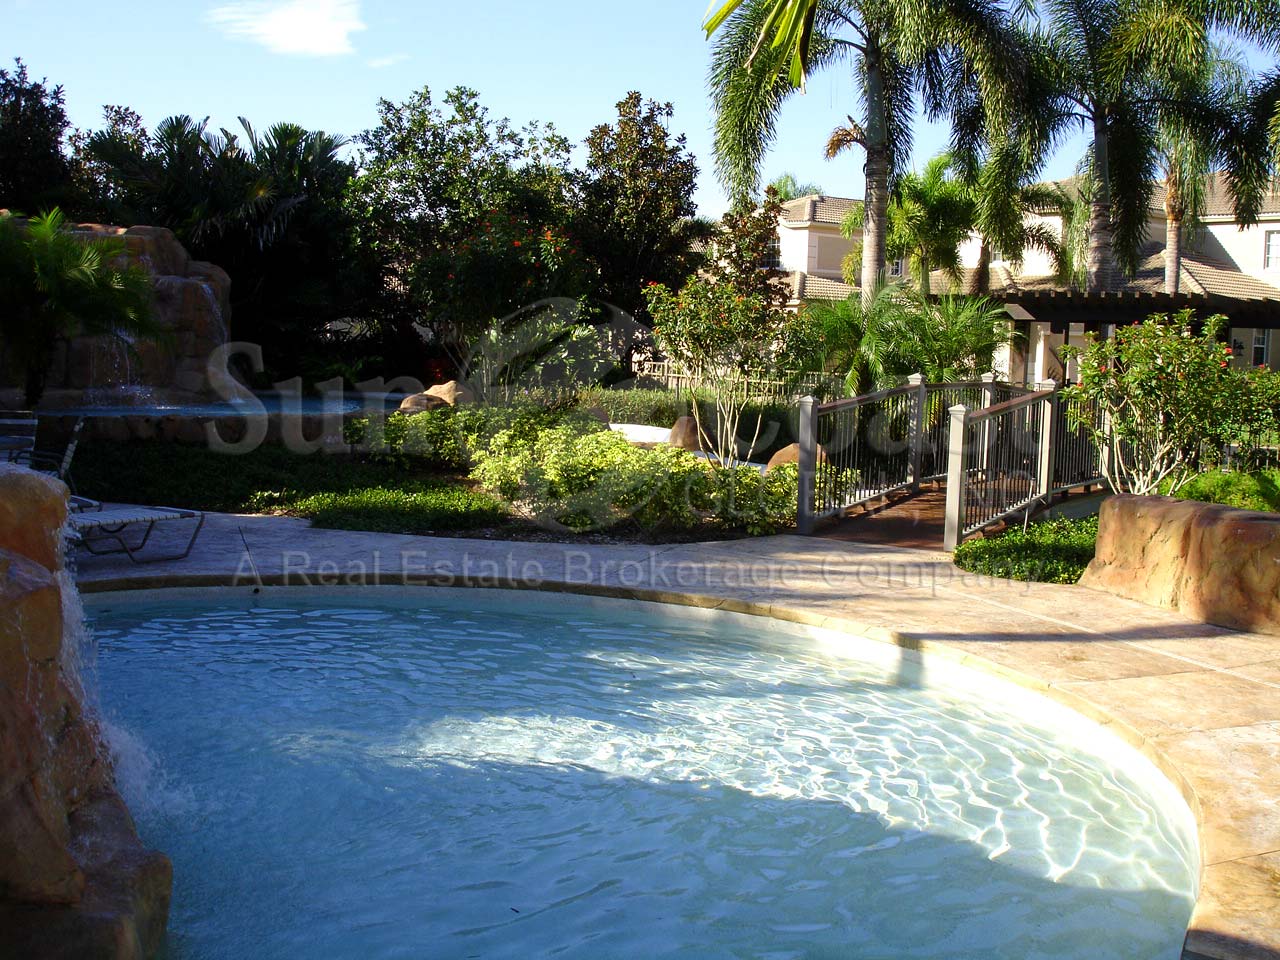 Regency Reserve community pool